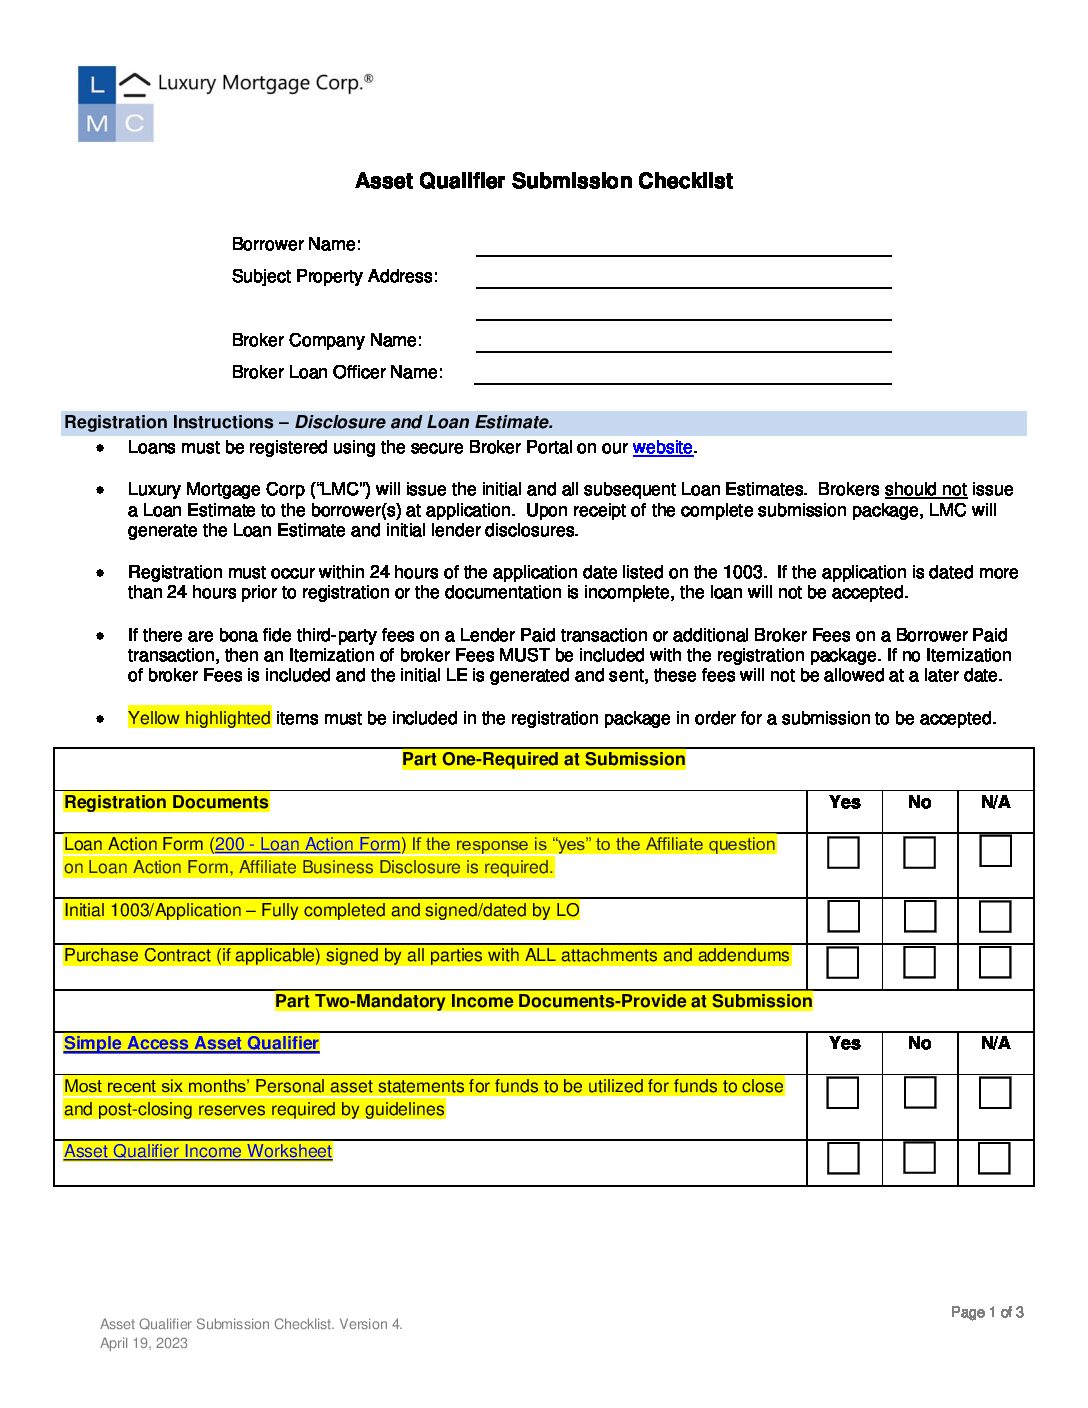 Asset Qualifier Submission Checklist V.3